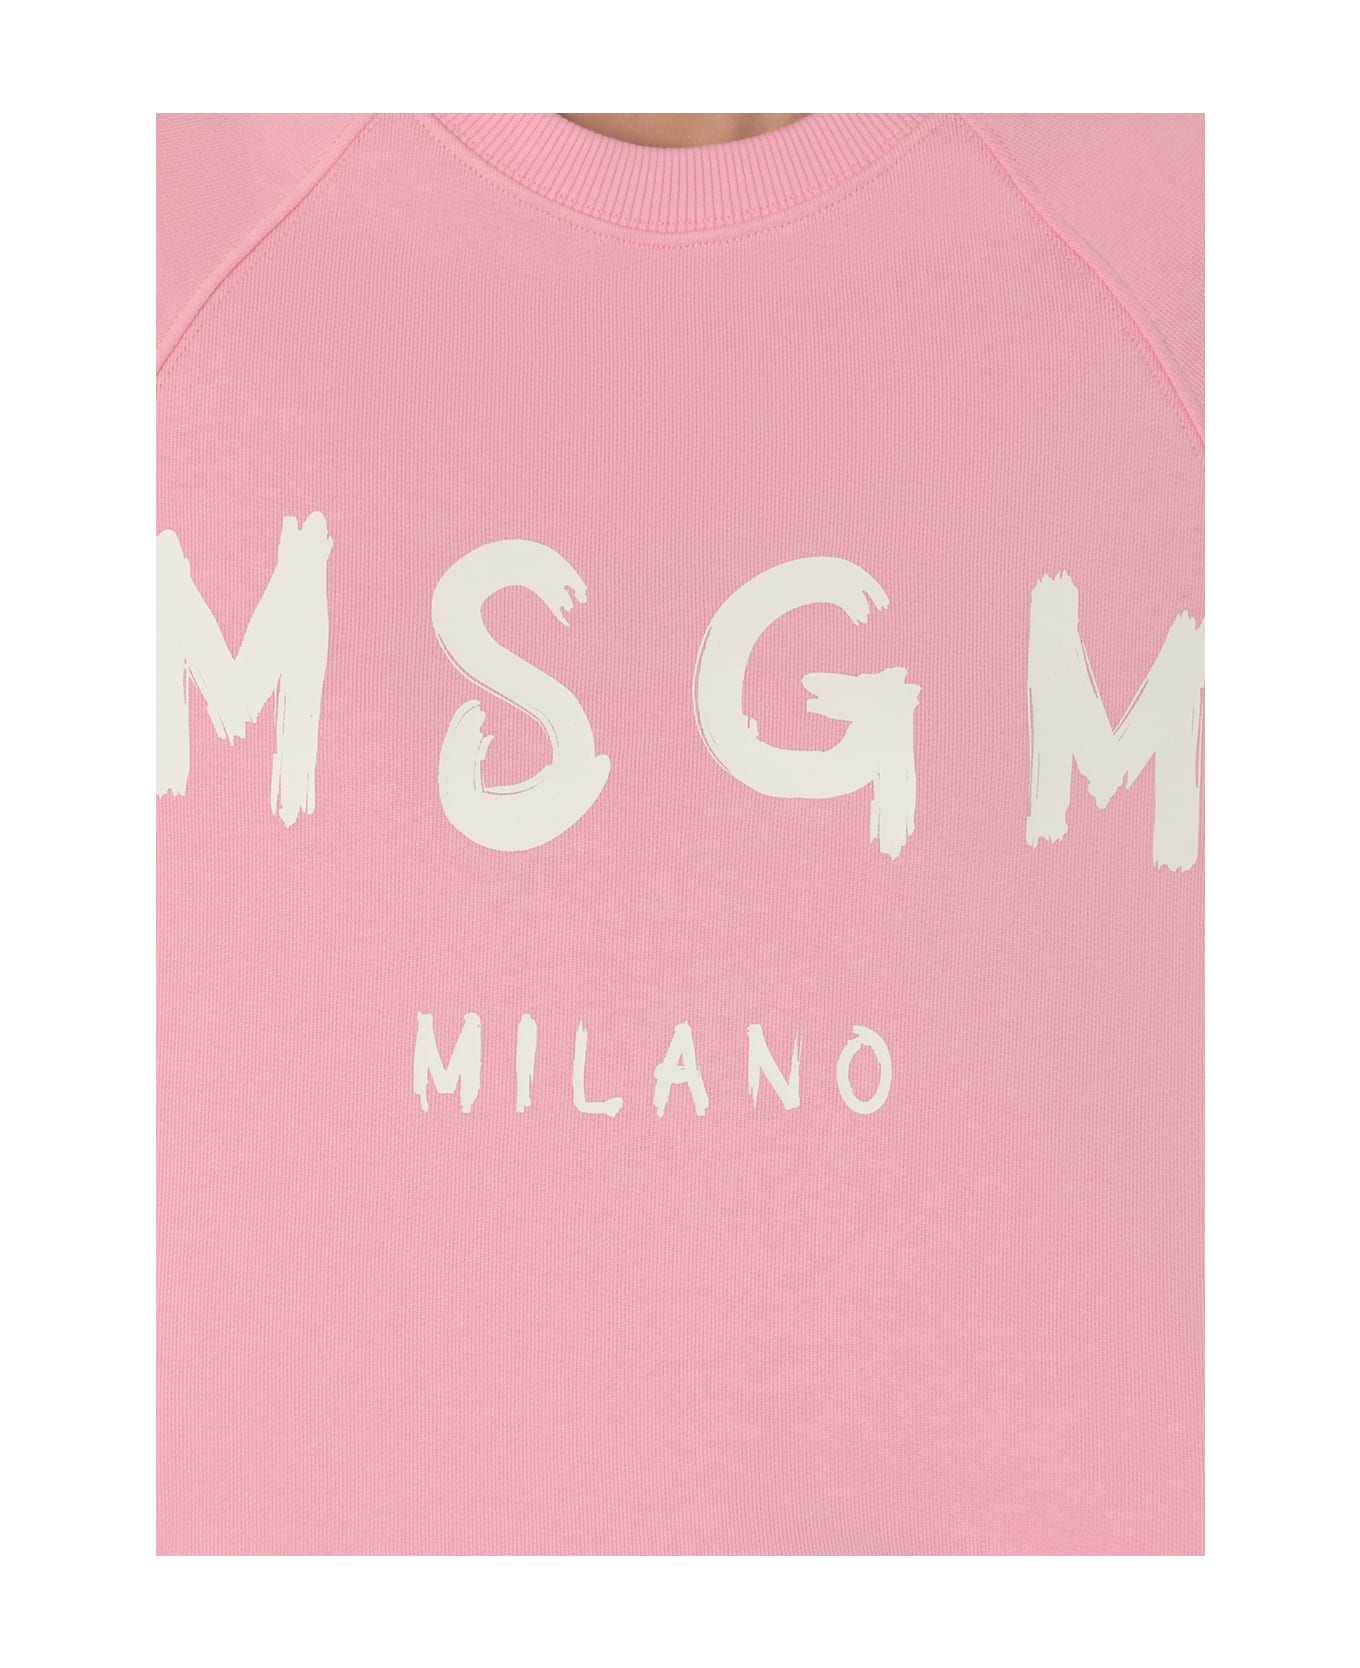 MSGM Sweatshirt With Logo - Pink